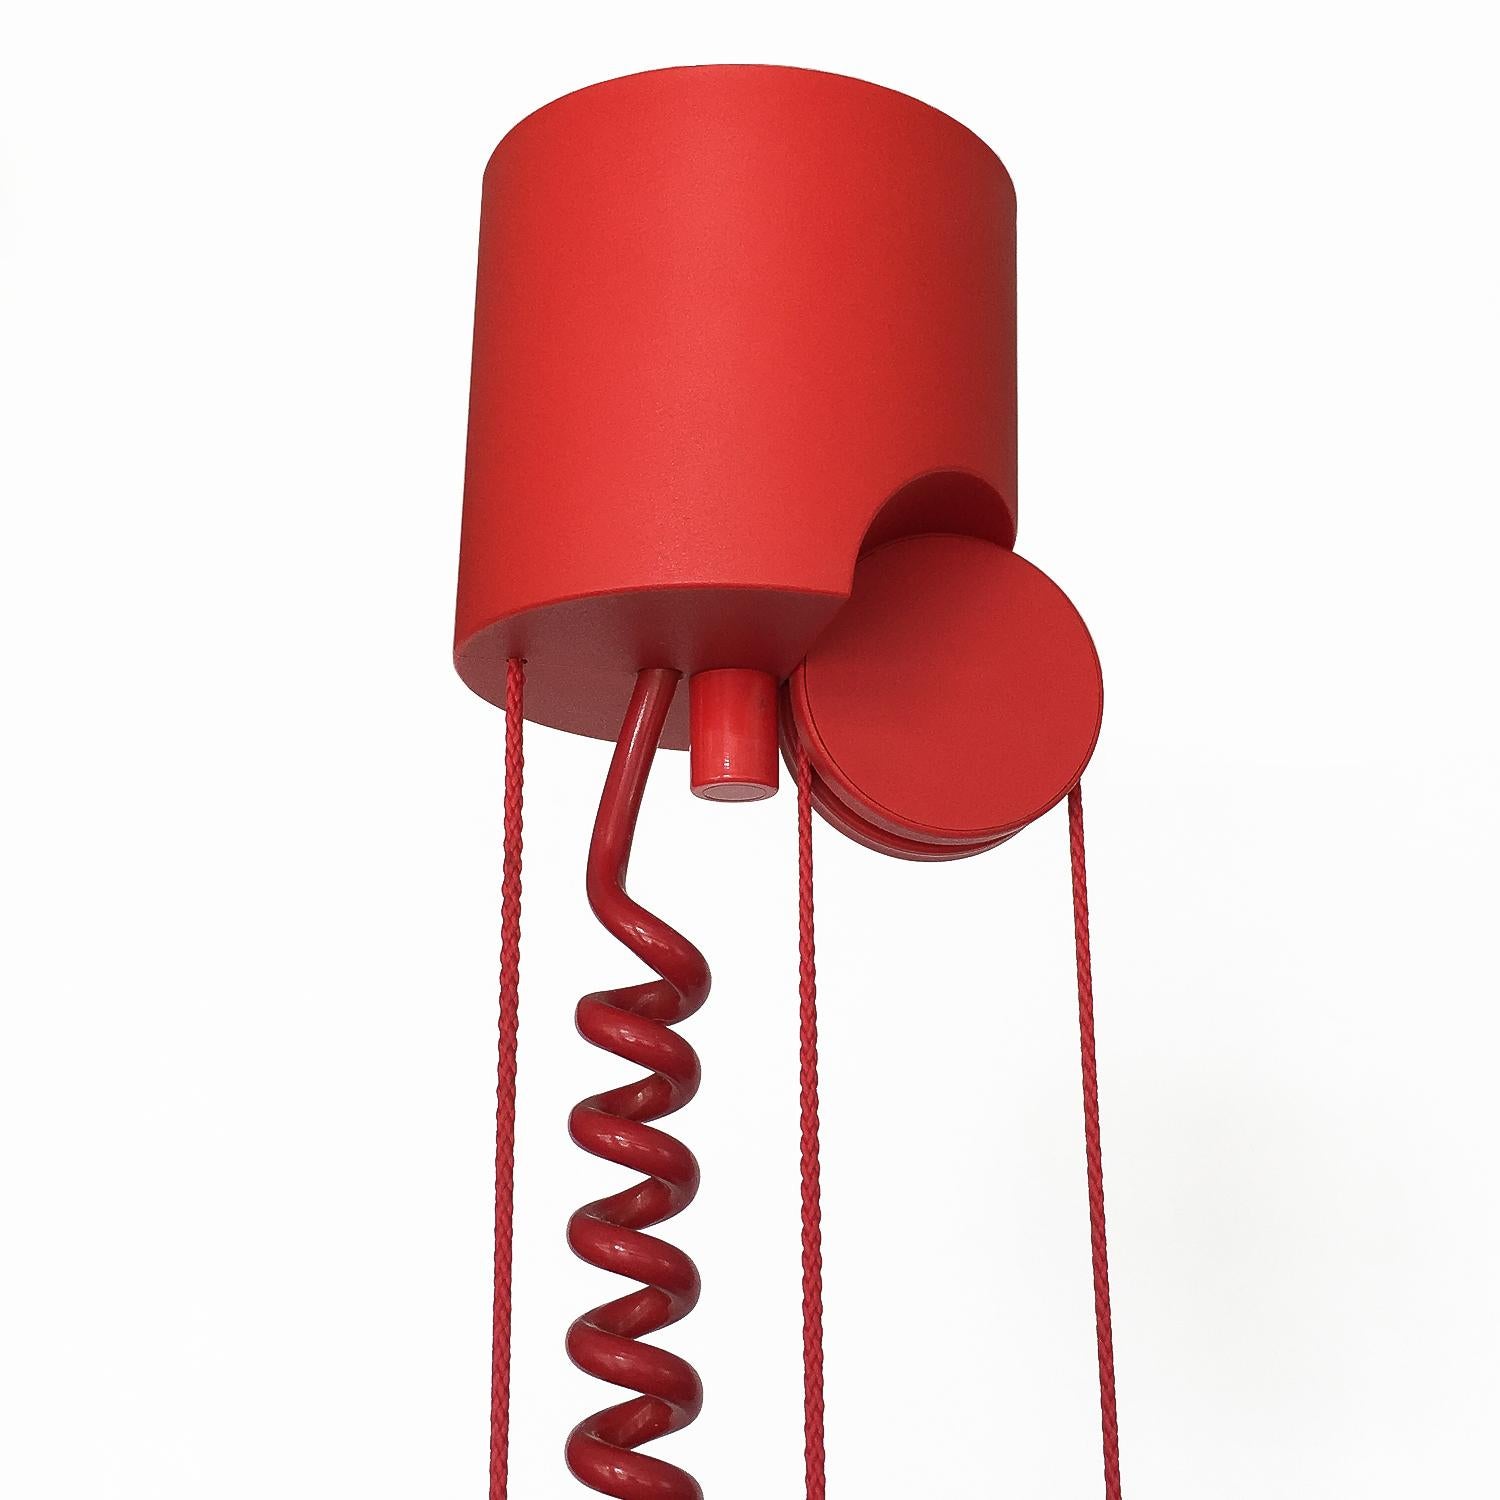 Cord Adjustable Red Enameled Perforated Postmodern Pendant Fixture